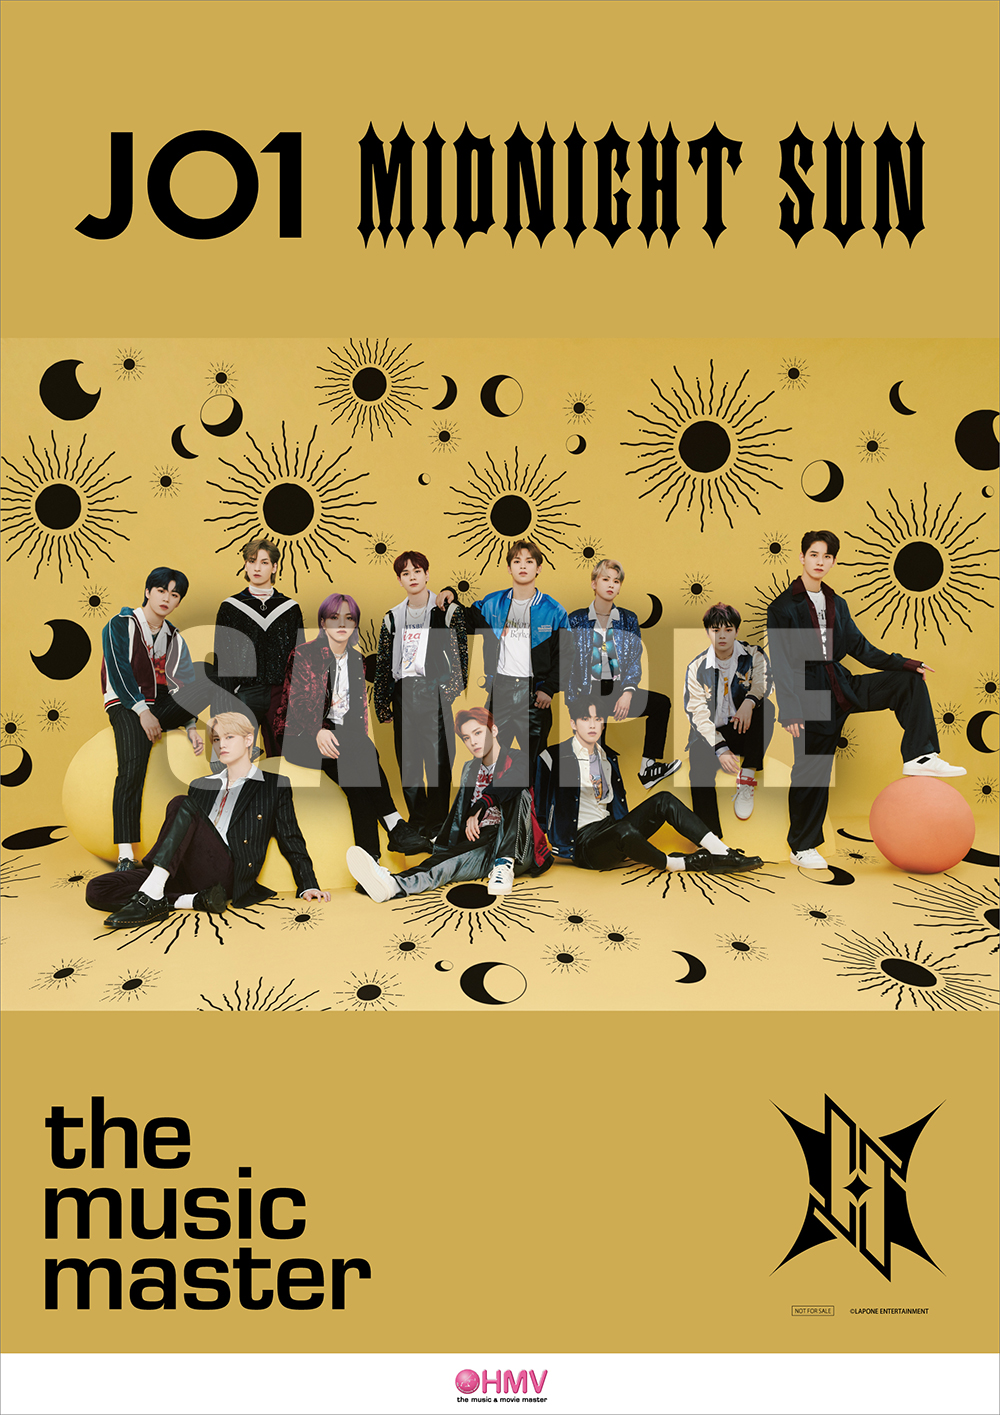 JO1 6TH SINGLE 『MIDNIGHT SUN』10/12発売|ジャパニーズポップス